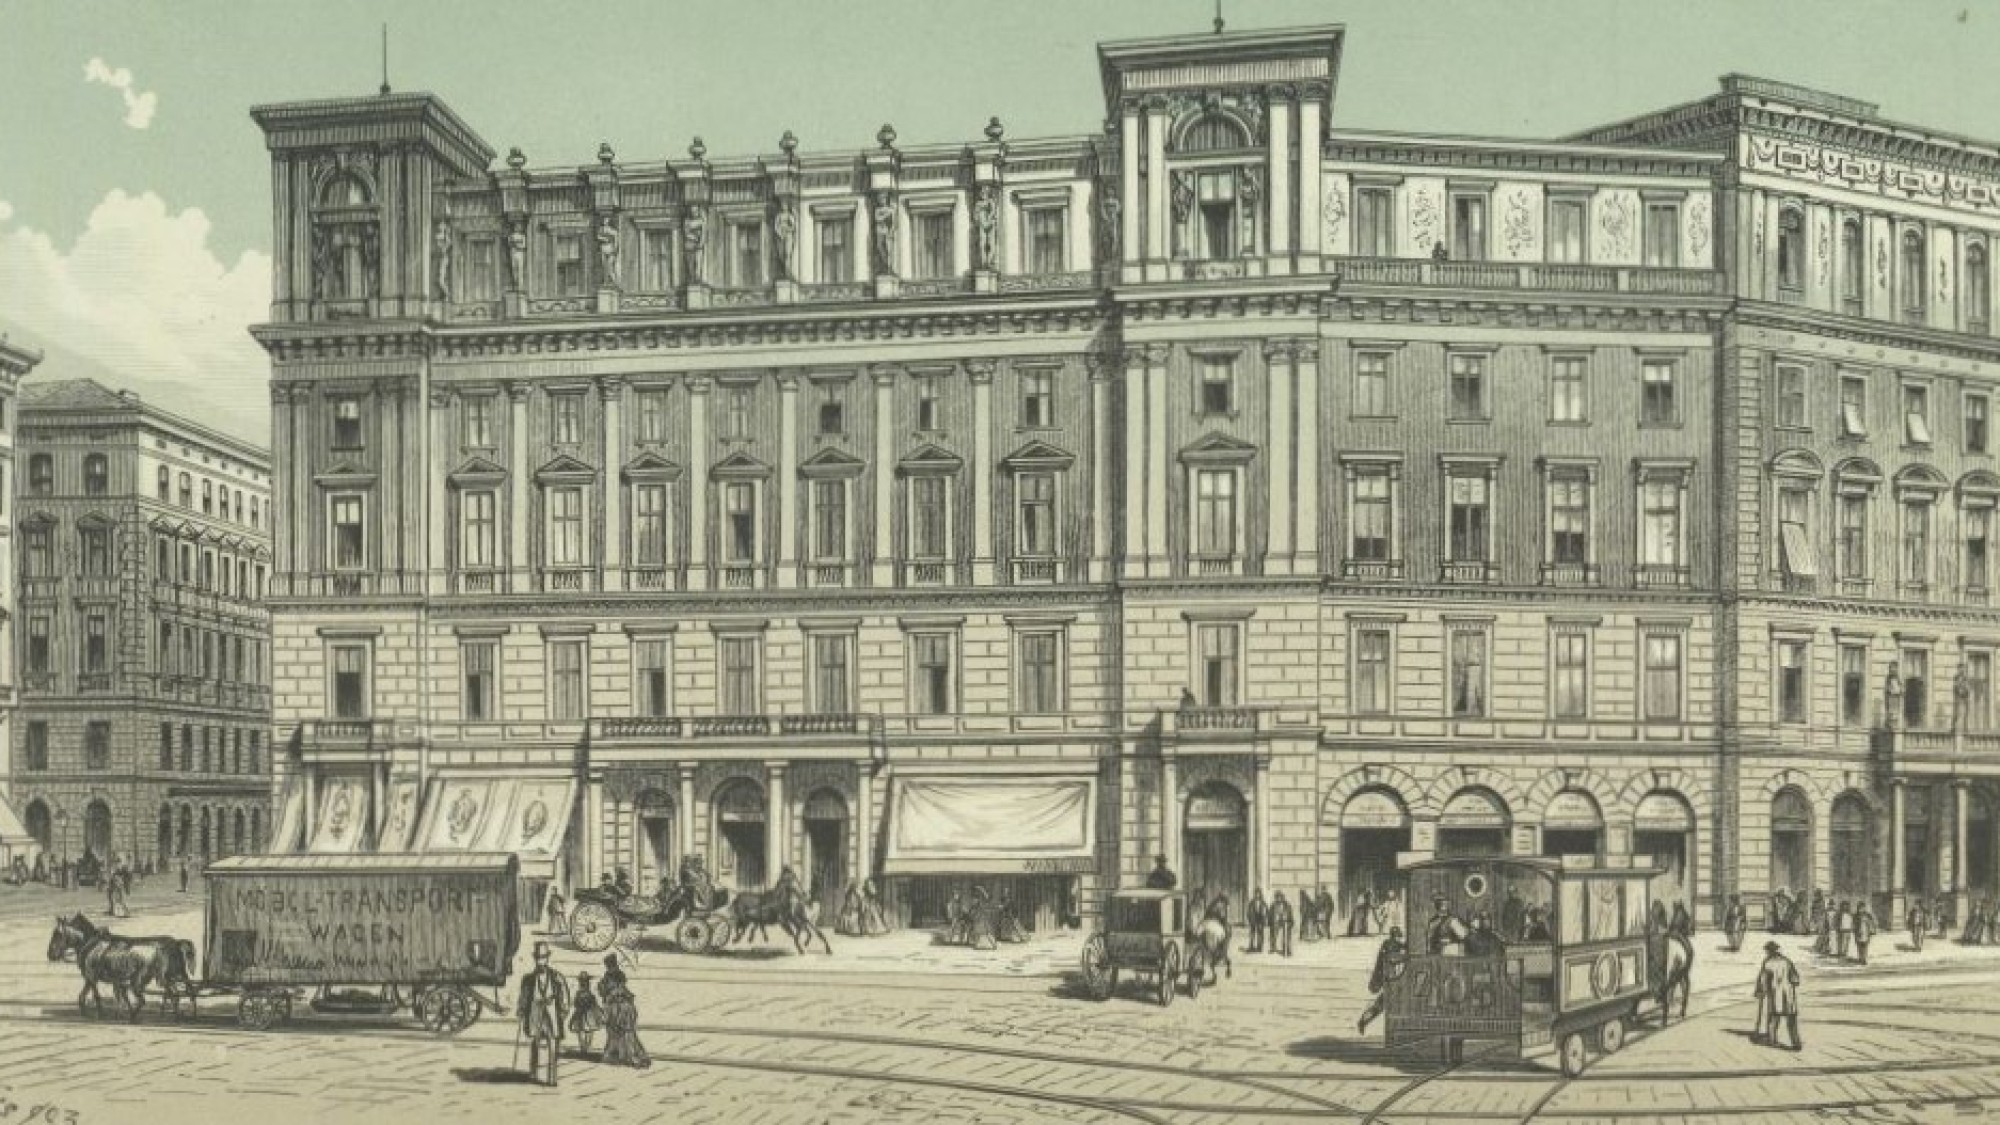 Lladislaus Eugen Petrovits, Franzensring Vienna 1880, color printing: 